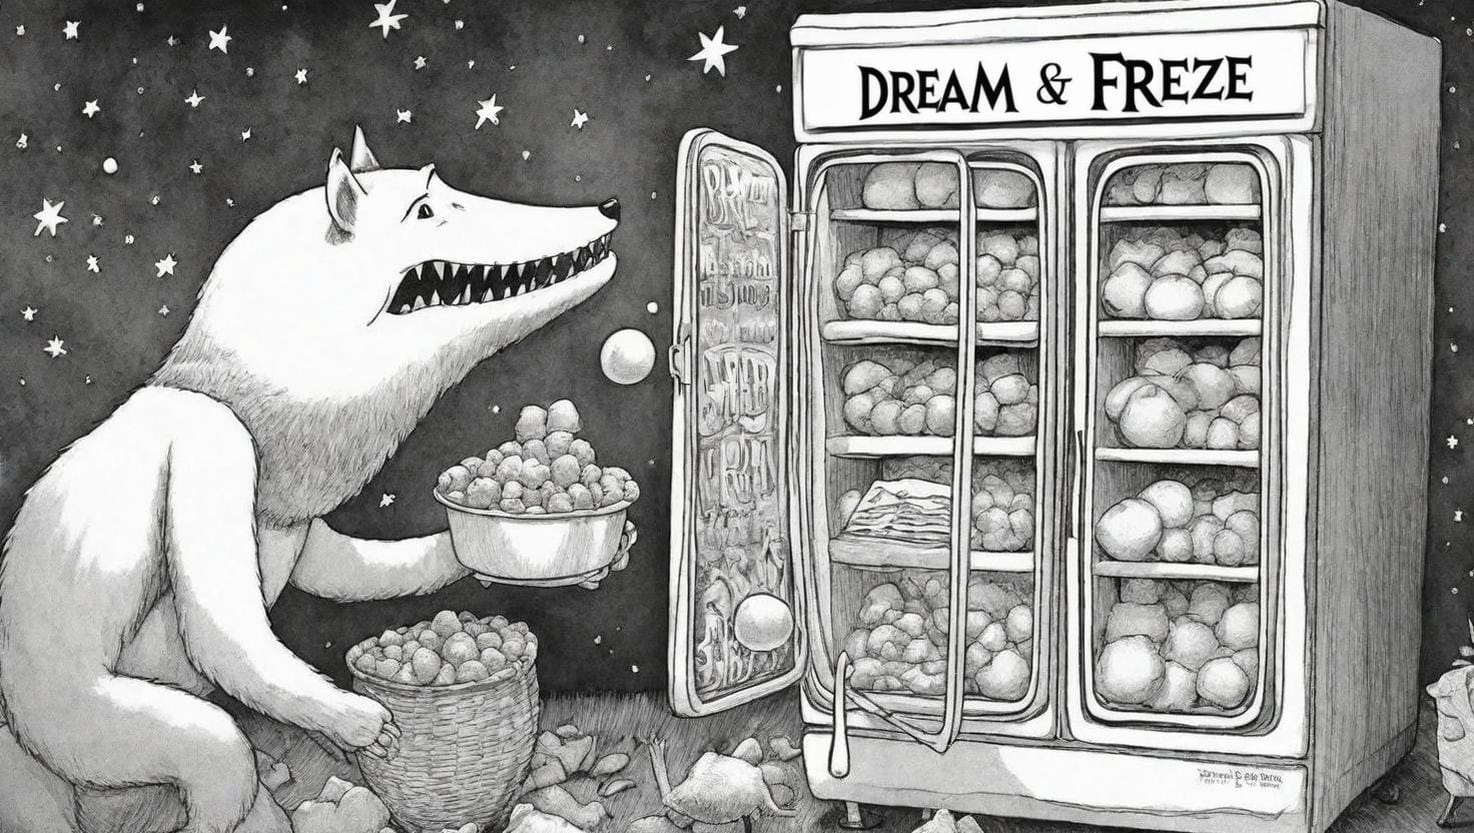 Frozen Dream